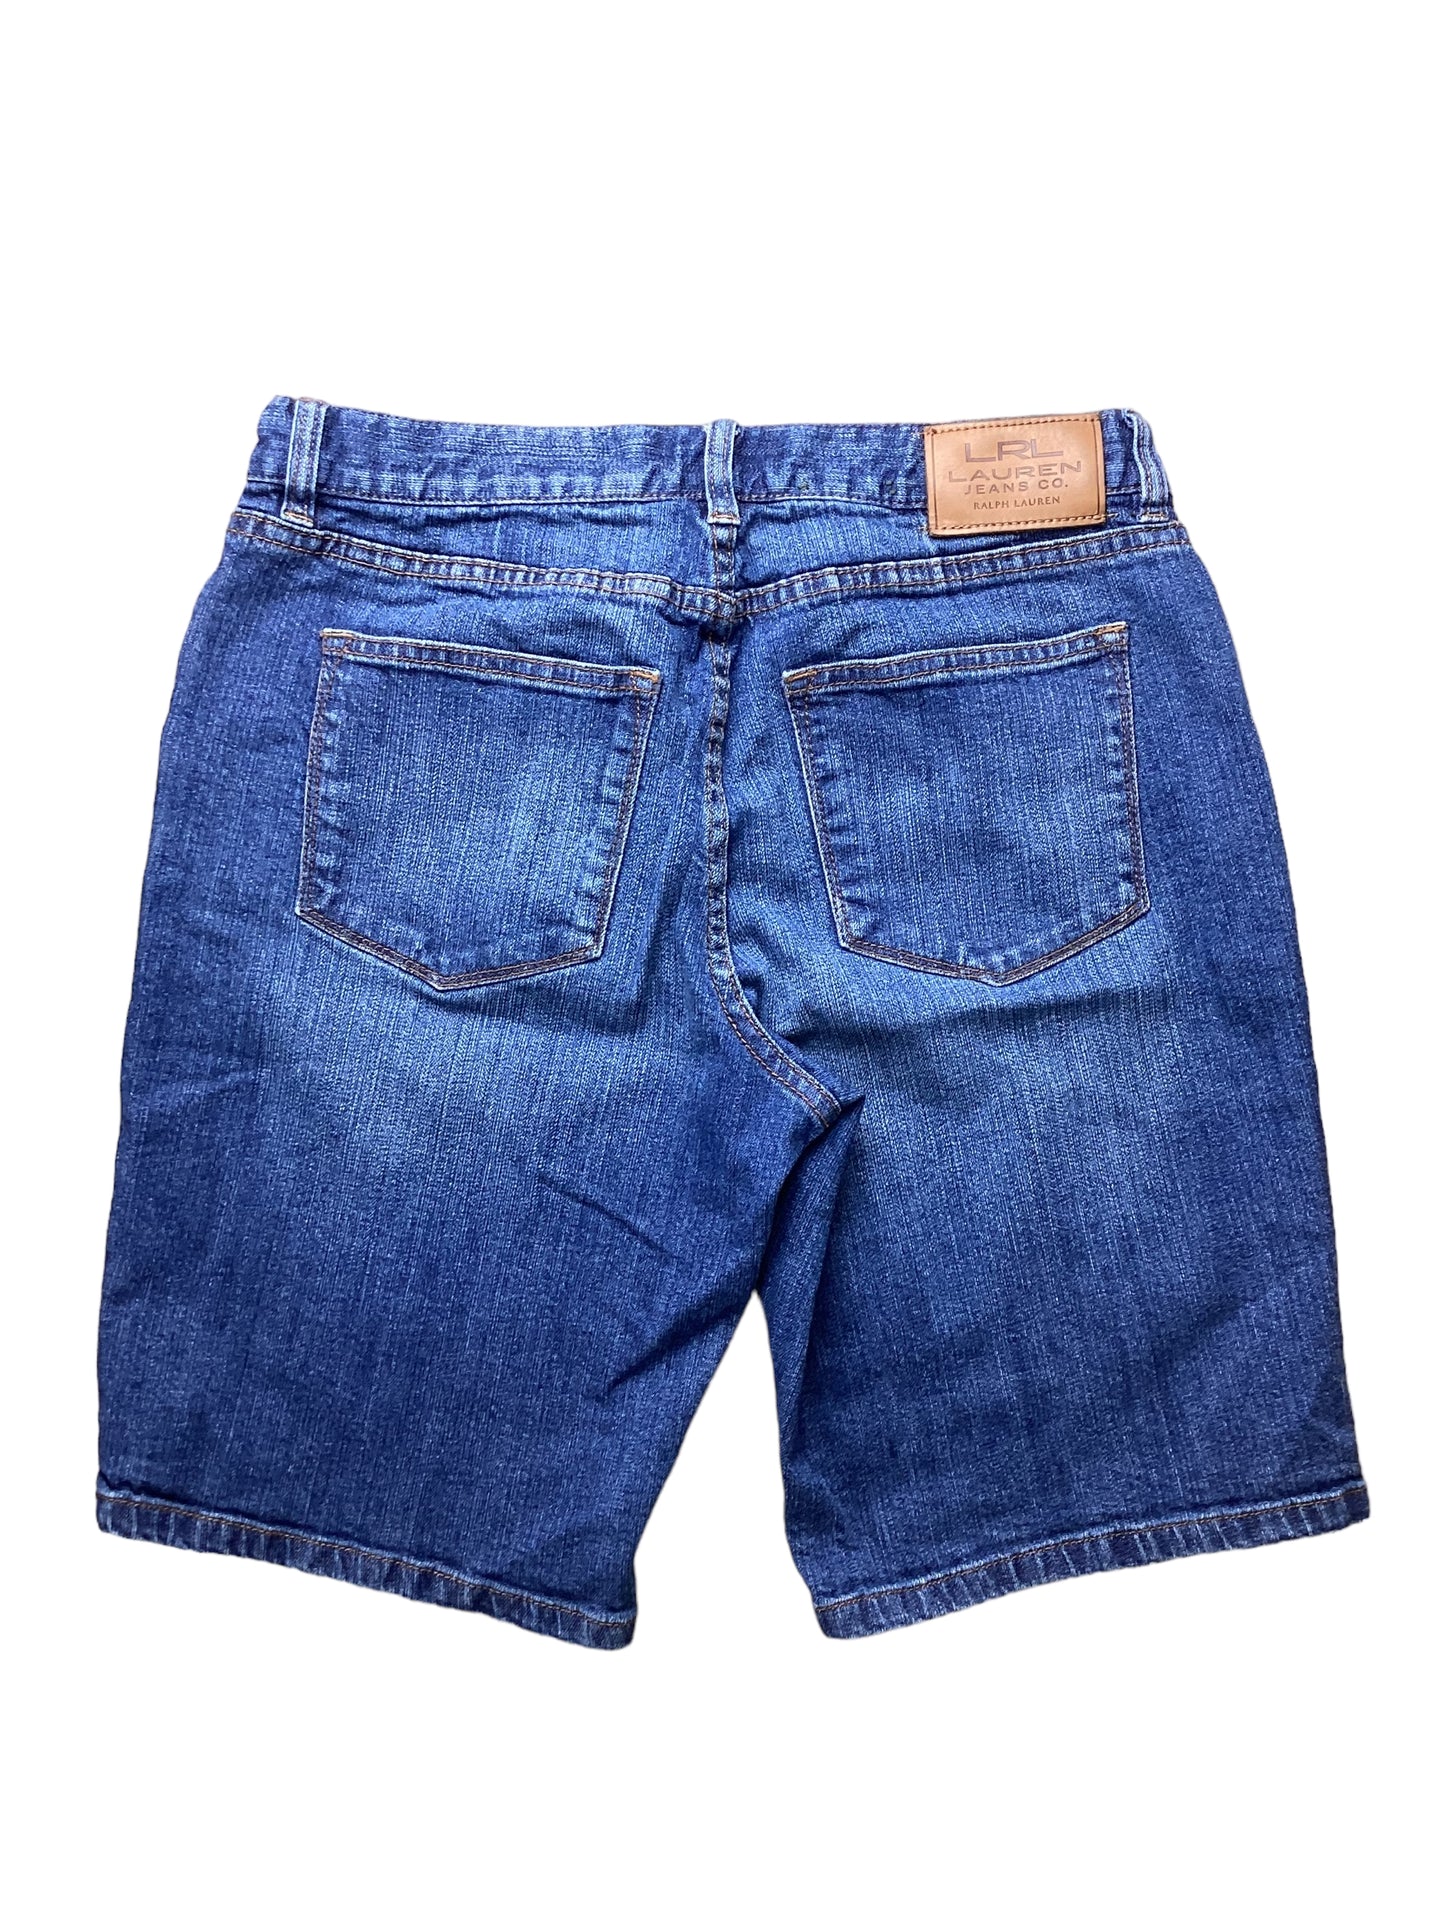 Shorts By Ralph Lauren Co  Size: 2